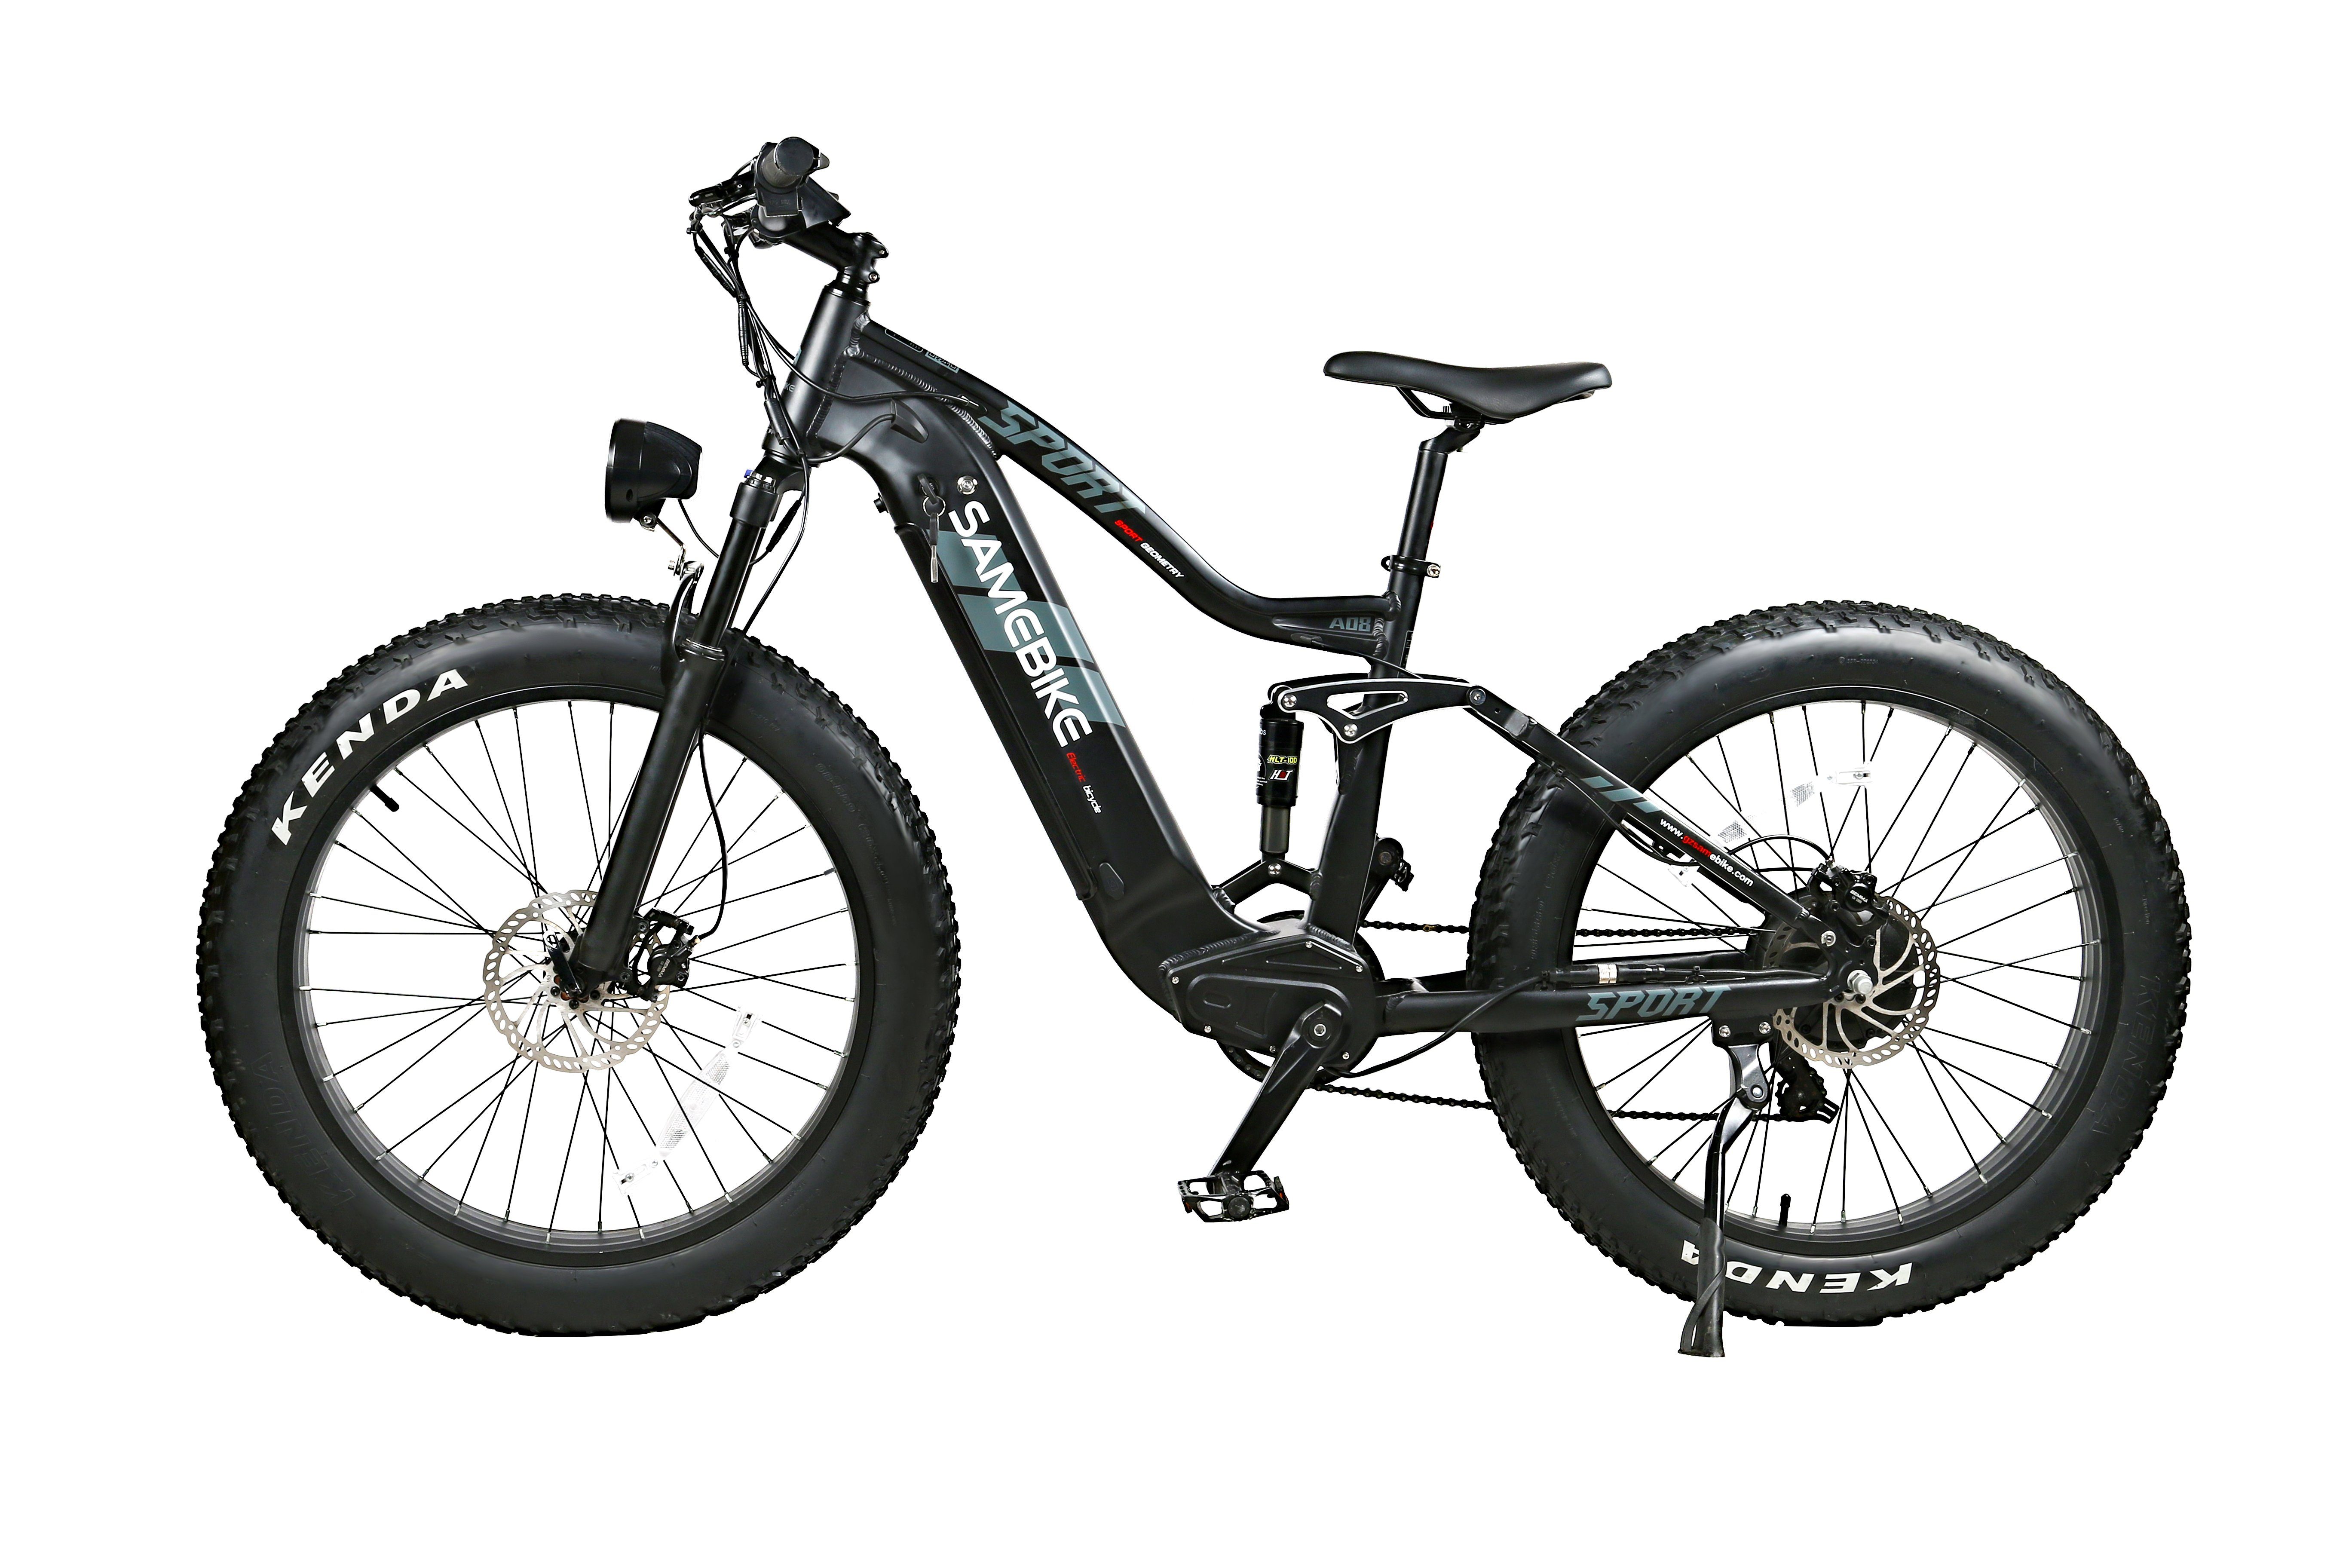 SAMEBIKE E-Bike RSA08 750W 26 Zoll Bafang Motor Fatbike E-Mountainbike  25km/h 17Ah